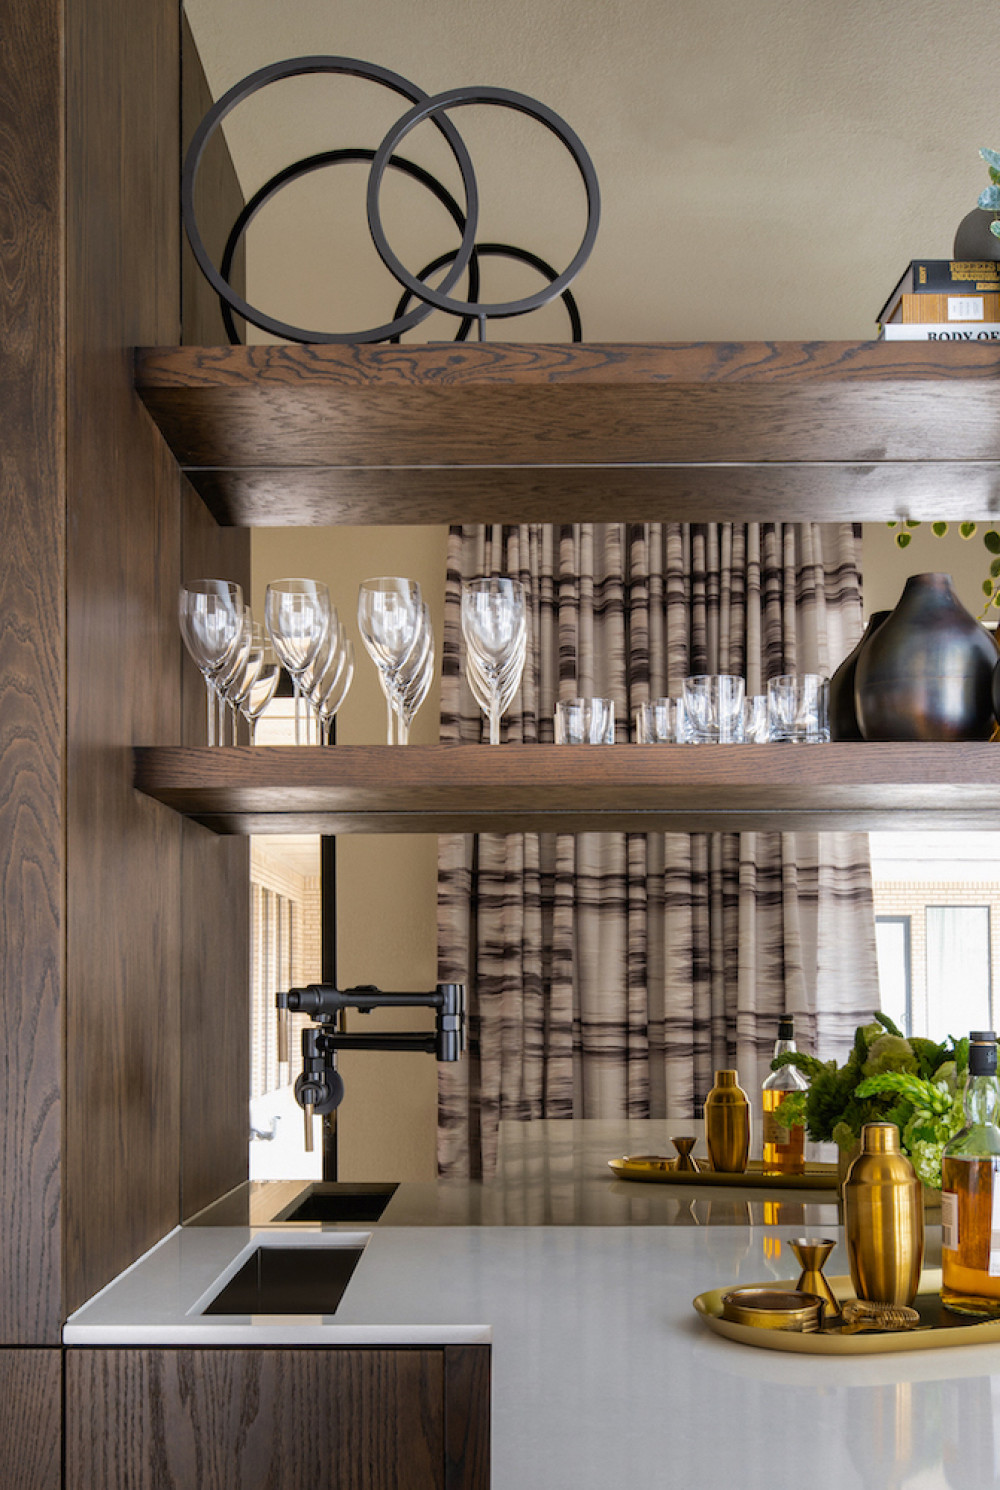 family-room-home-bar-interior-design-wooden-shelves-gold-tray